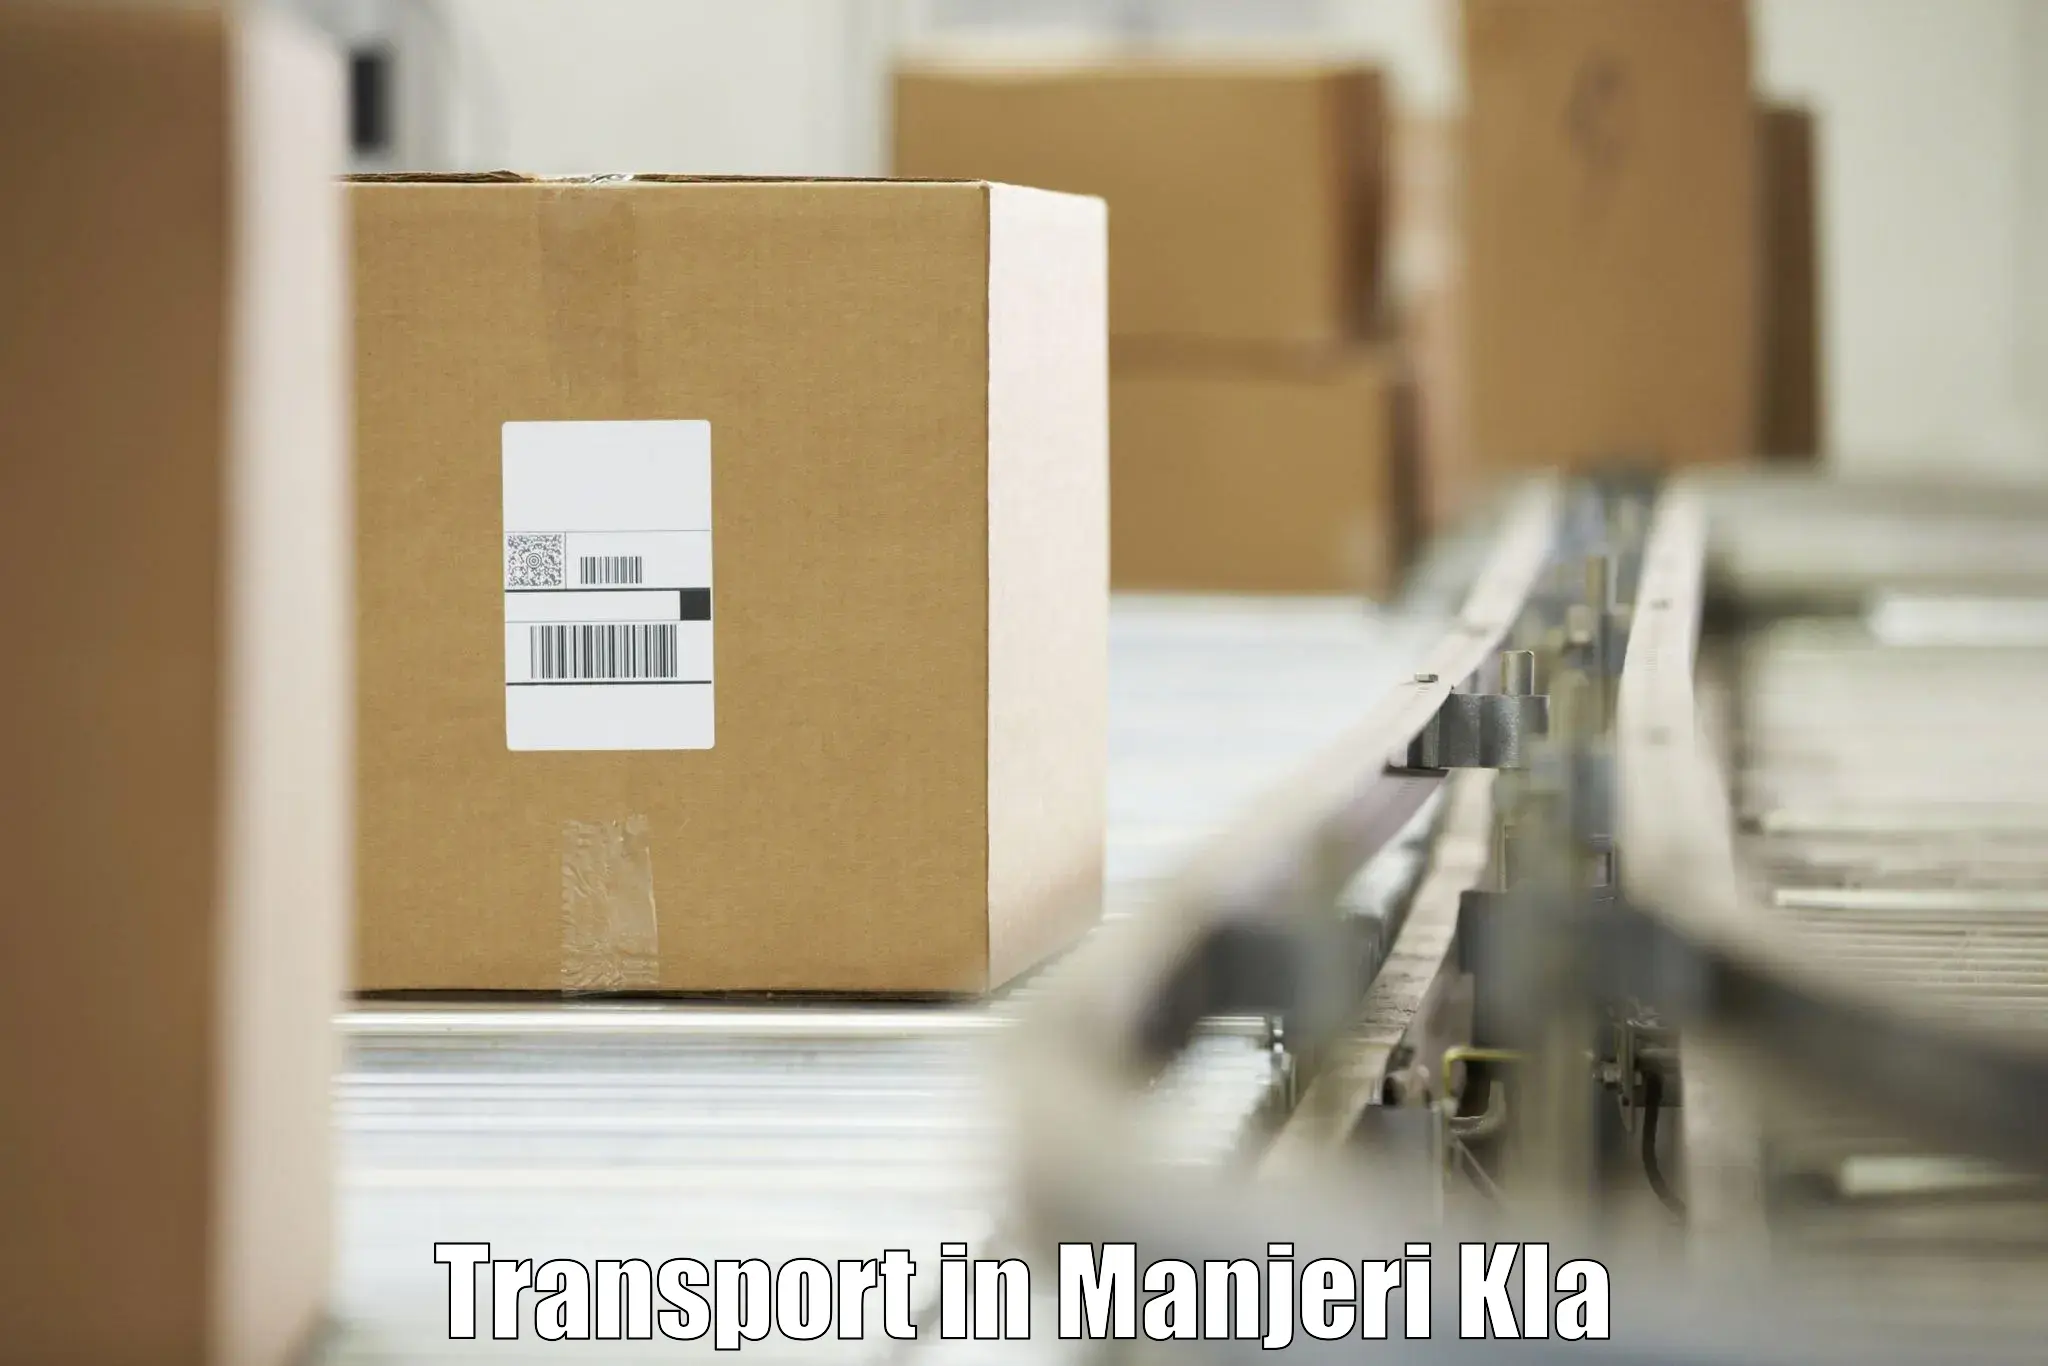 Package delivery services in Manjeri Kla